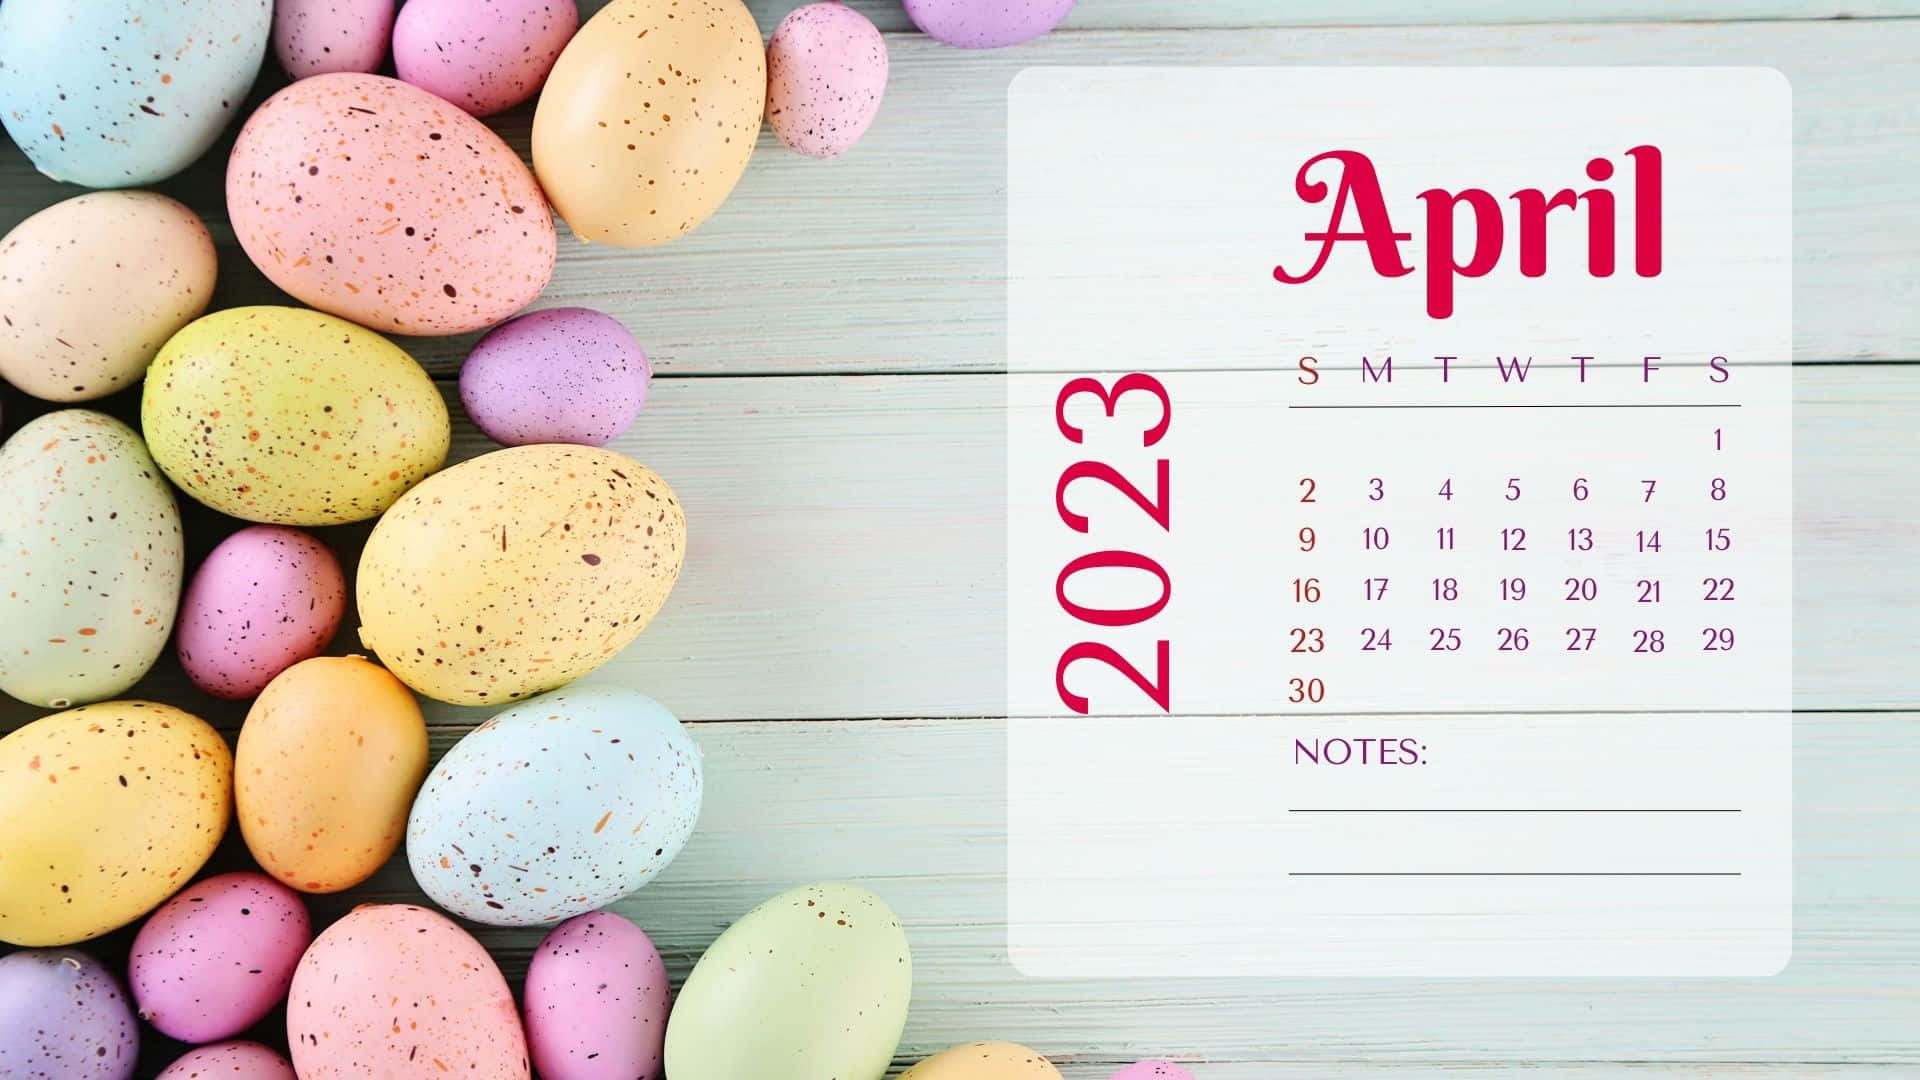 Free April 2023 Calendar Wallpaper Downloads, April 2023 Calendar Wallpaper for FREE